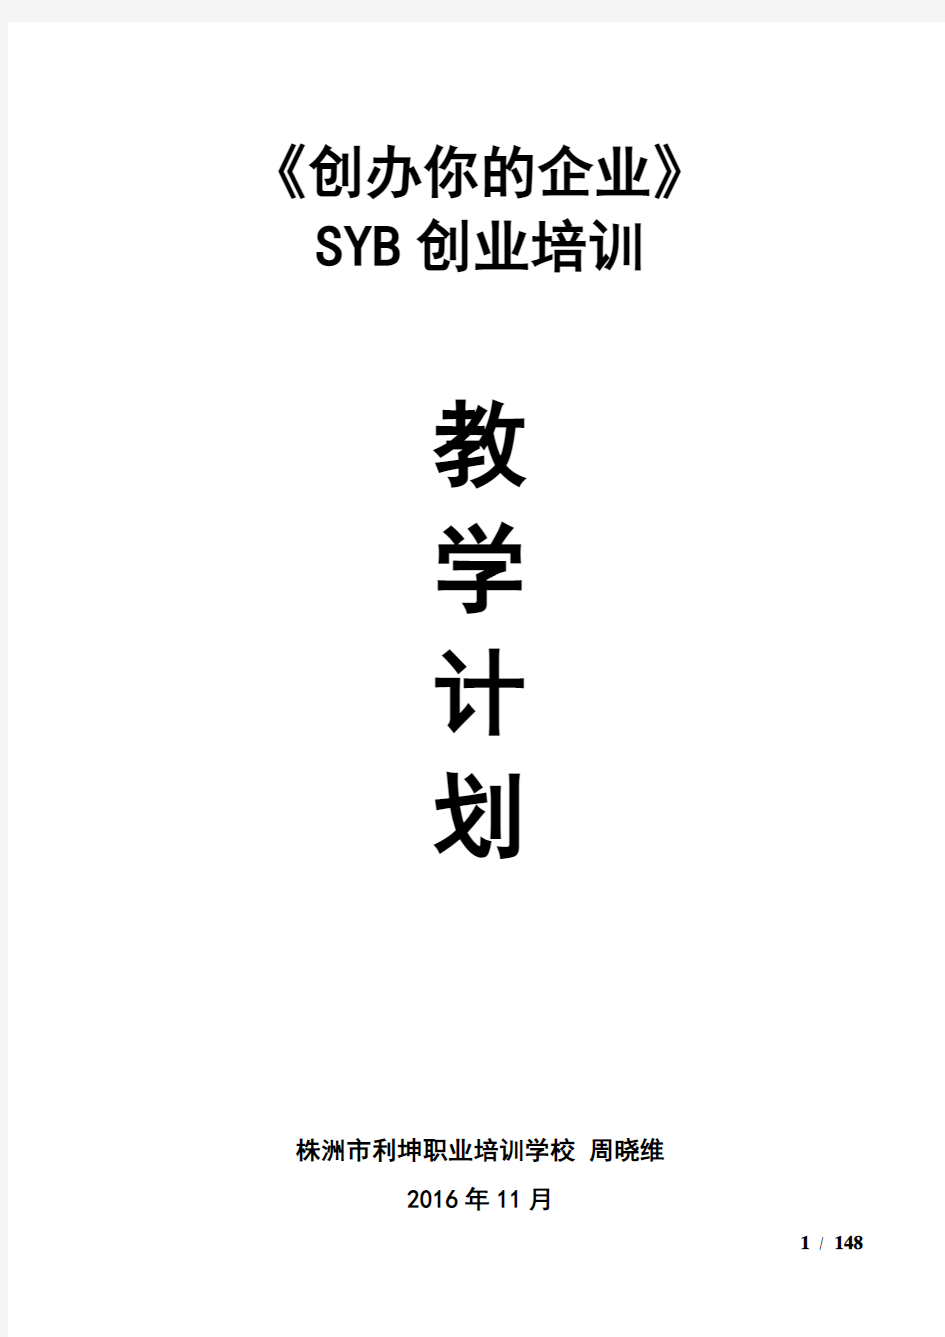 SYB创业培训教学计划(教案)